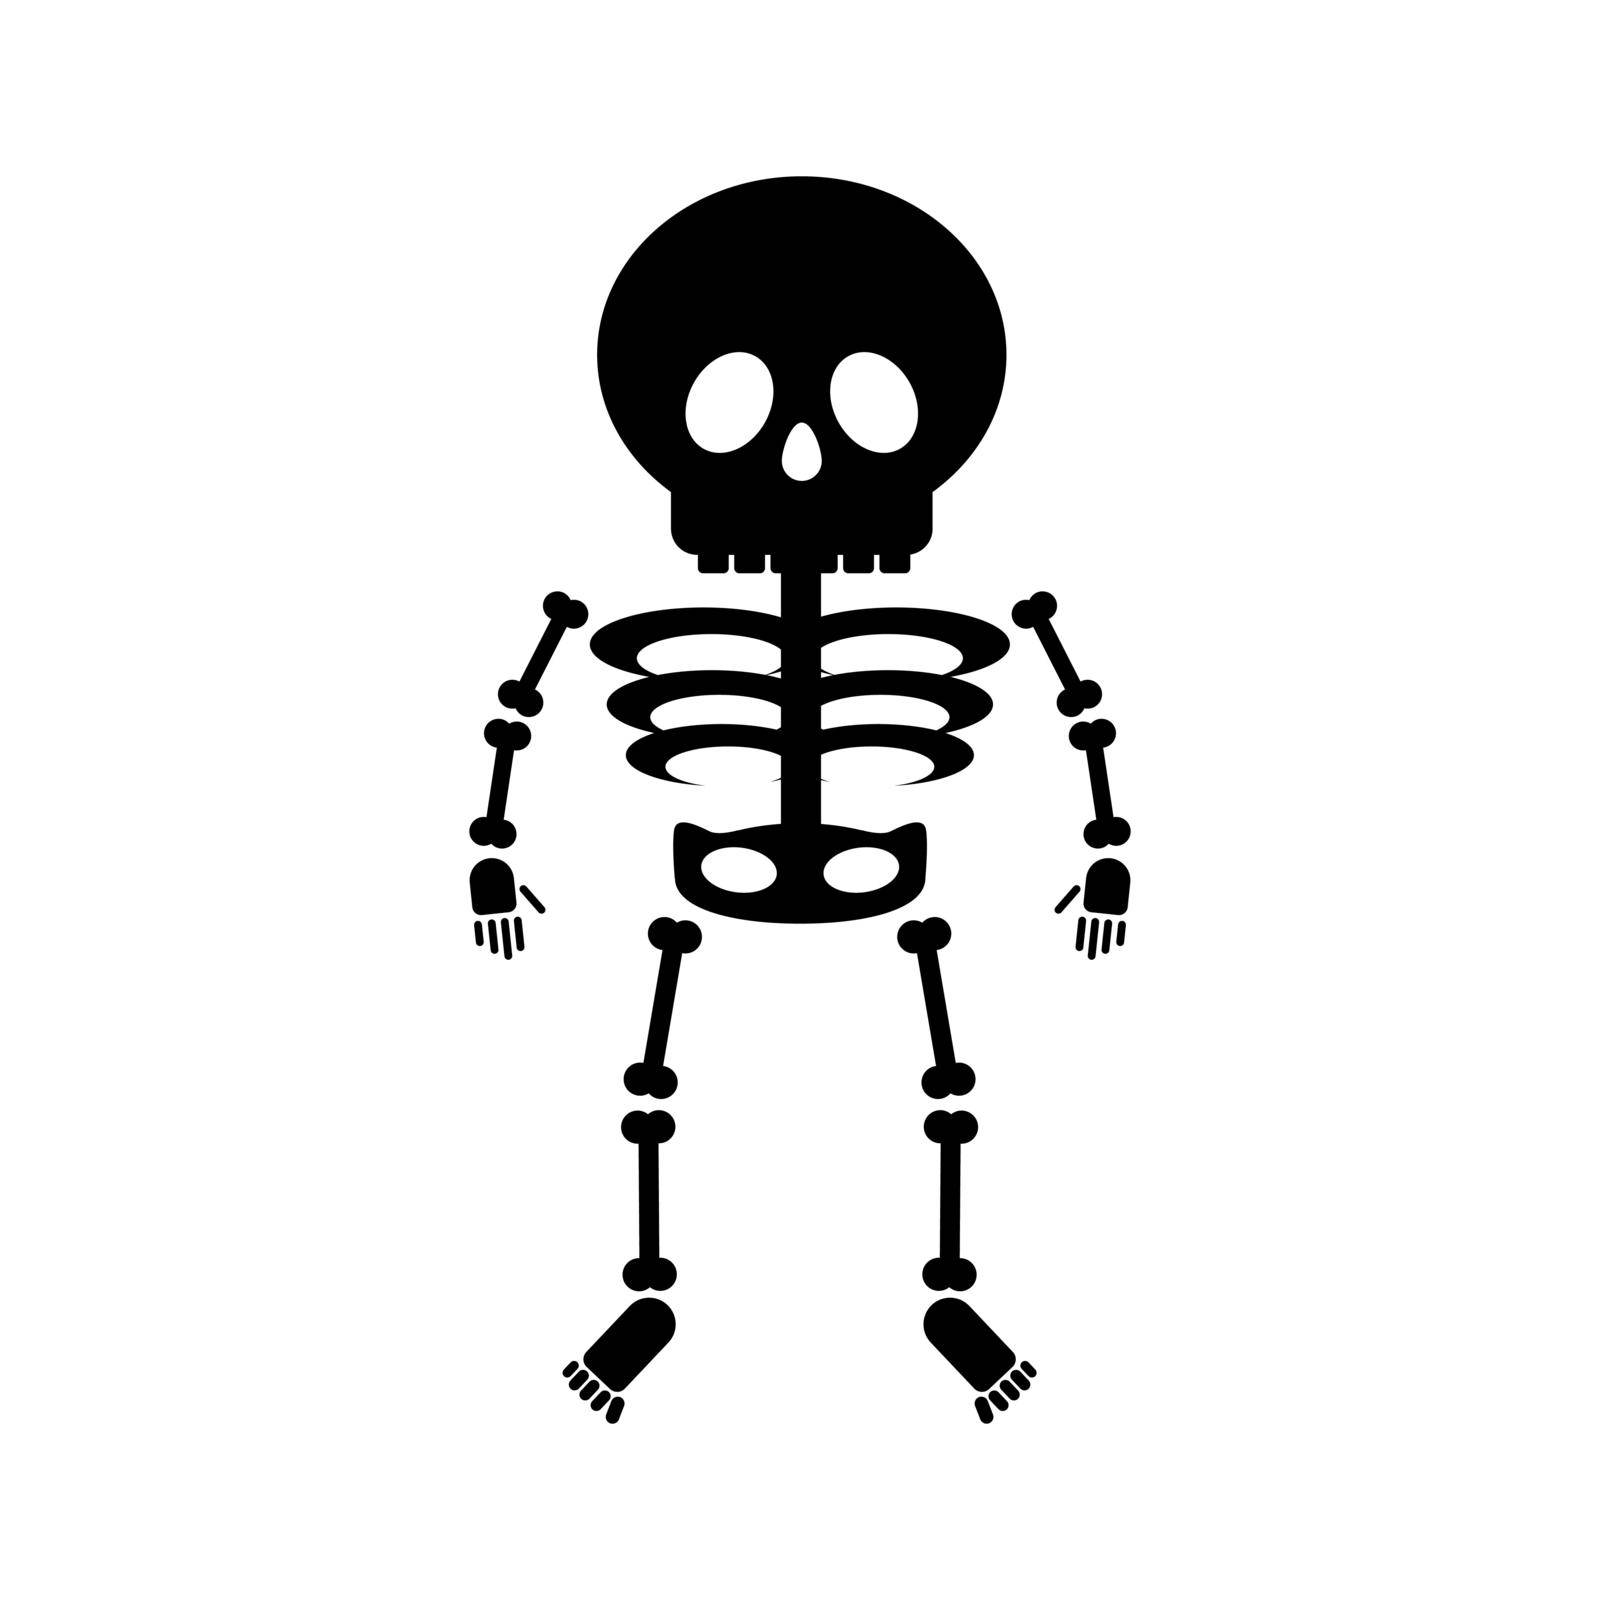 Skeleton in cartoon style by kiyanochka